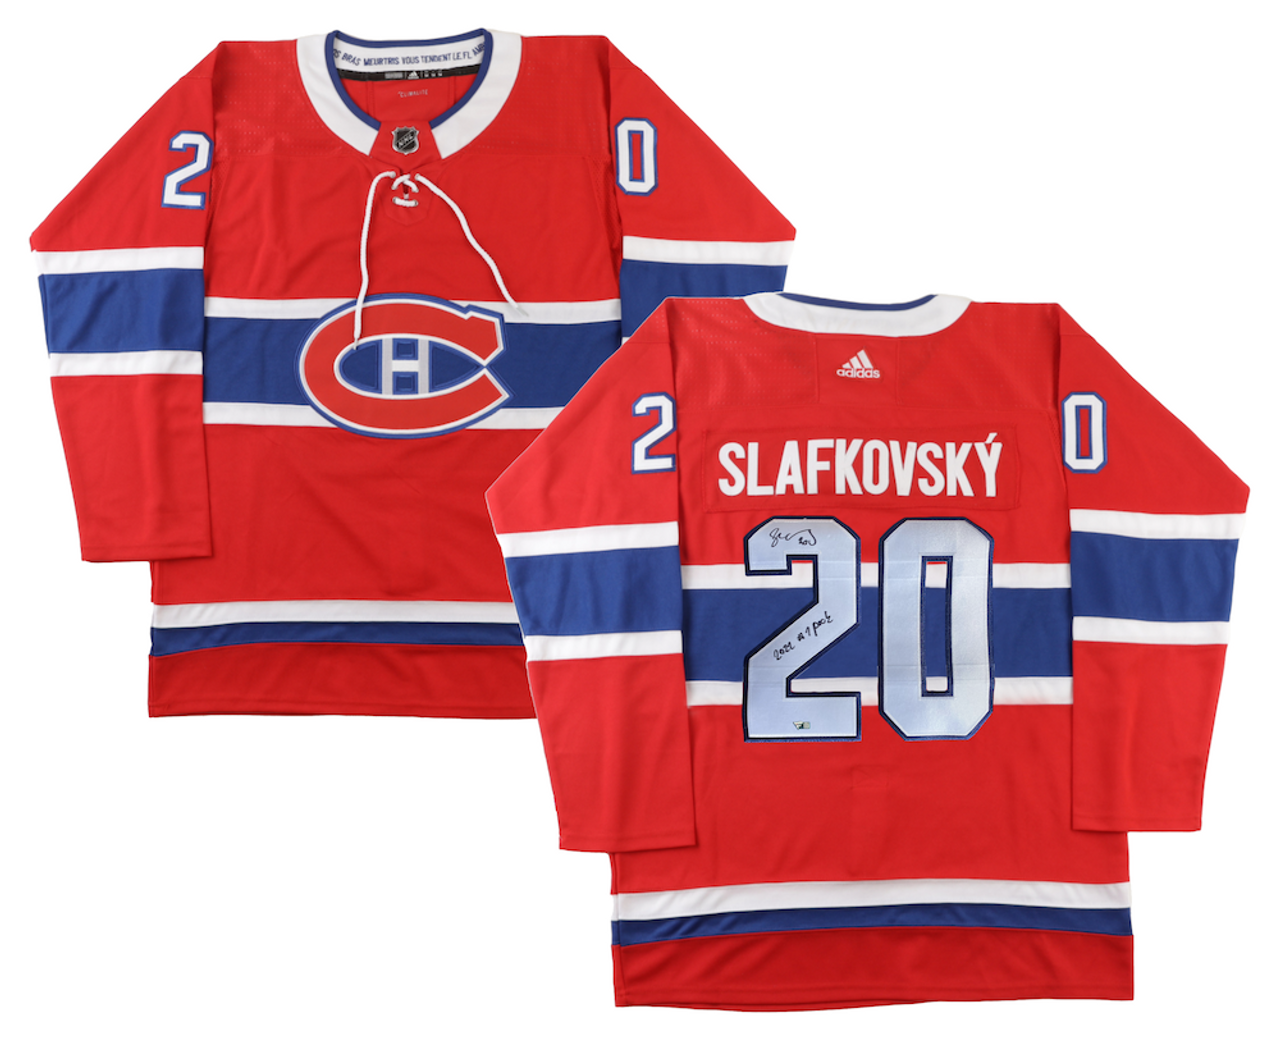 Juraj Slafkovsky Montreal Canadiens Autographed Fanatics Authentic Red  Adidas Authentic Jersey with 2022 #1 Pick Inscription